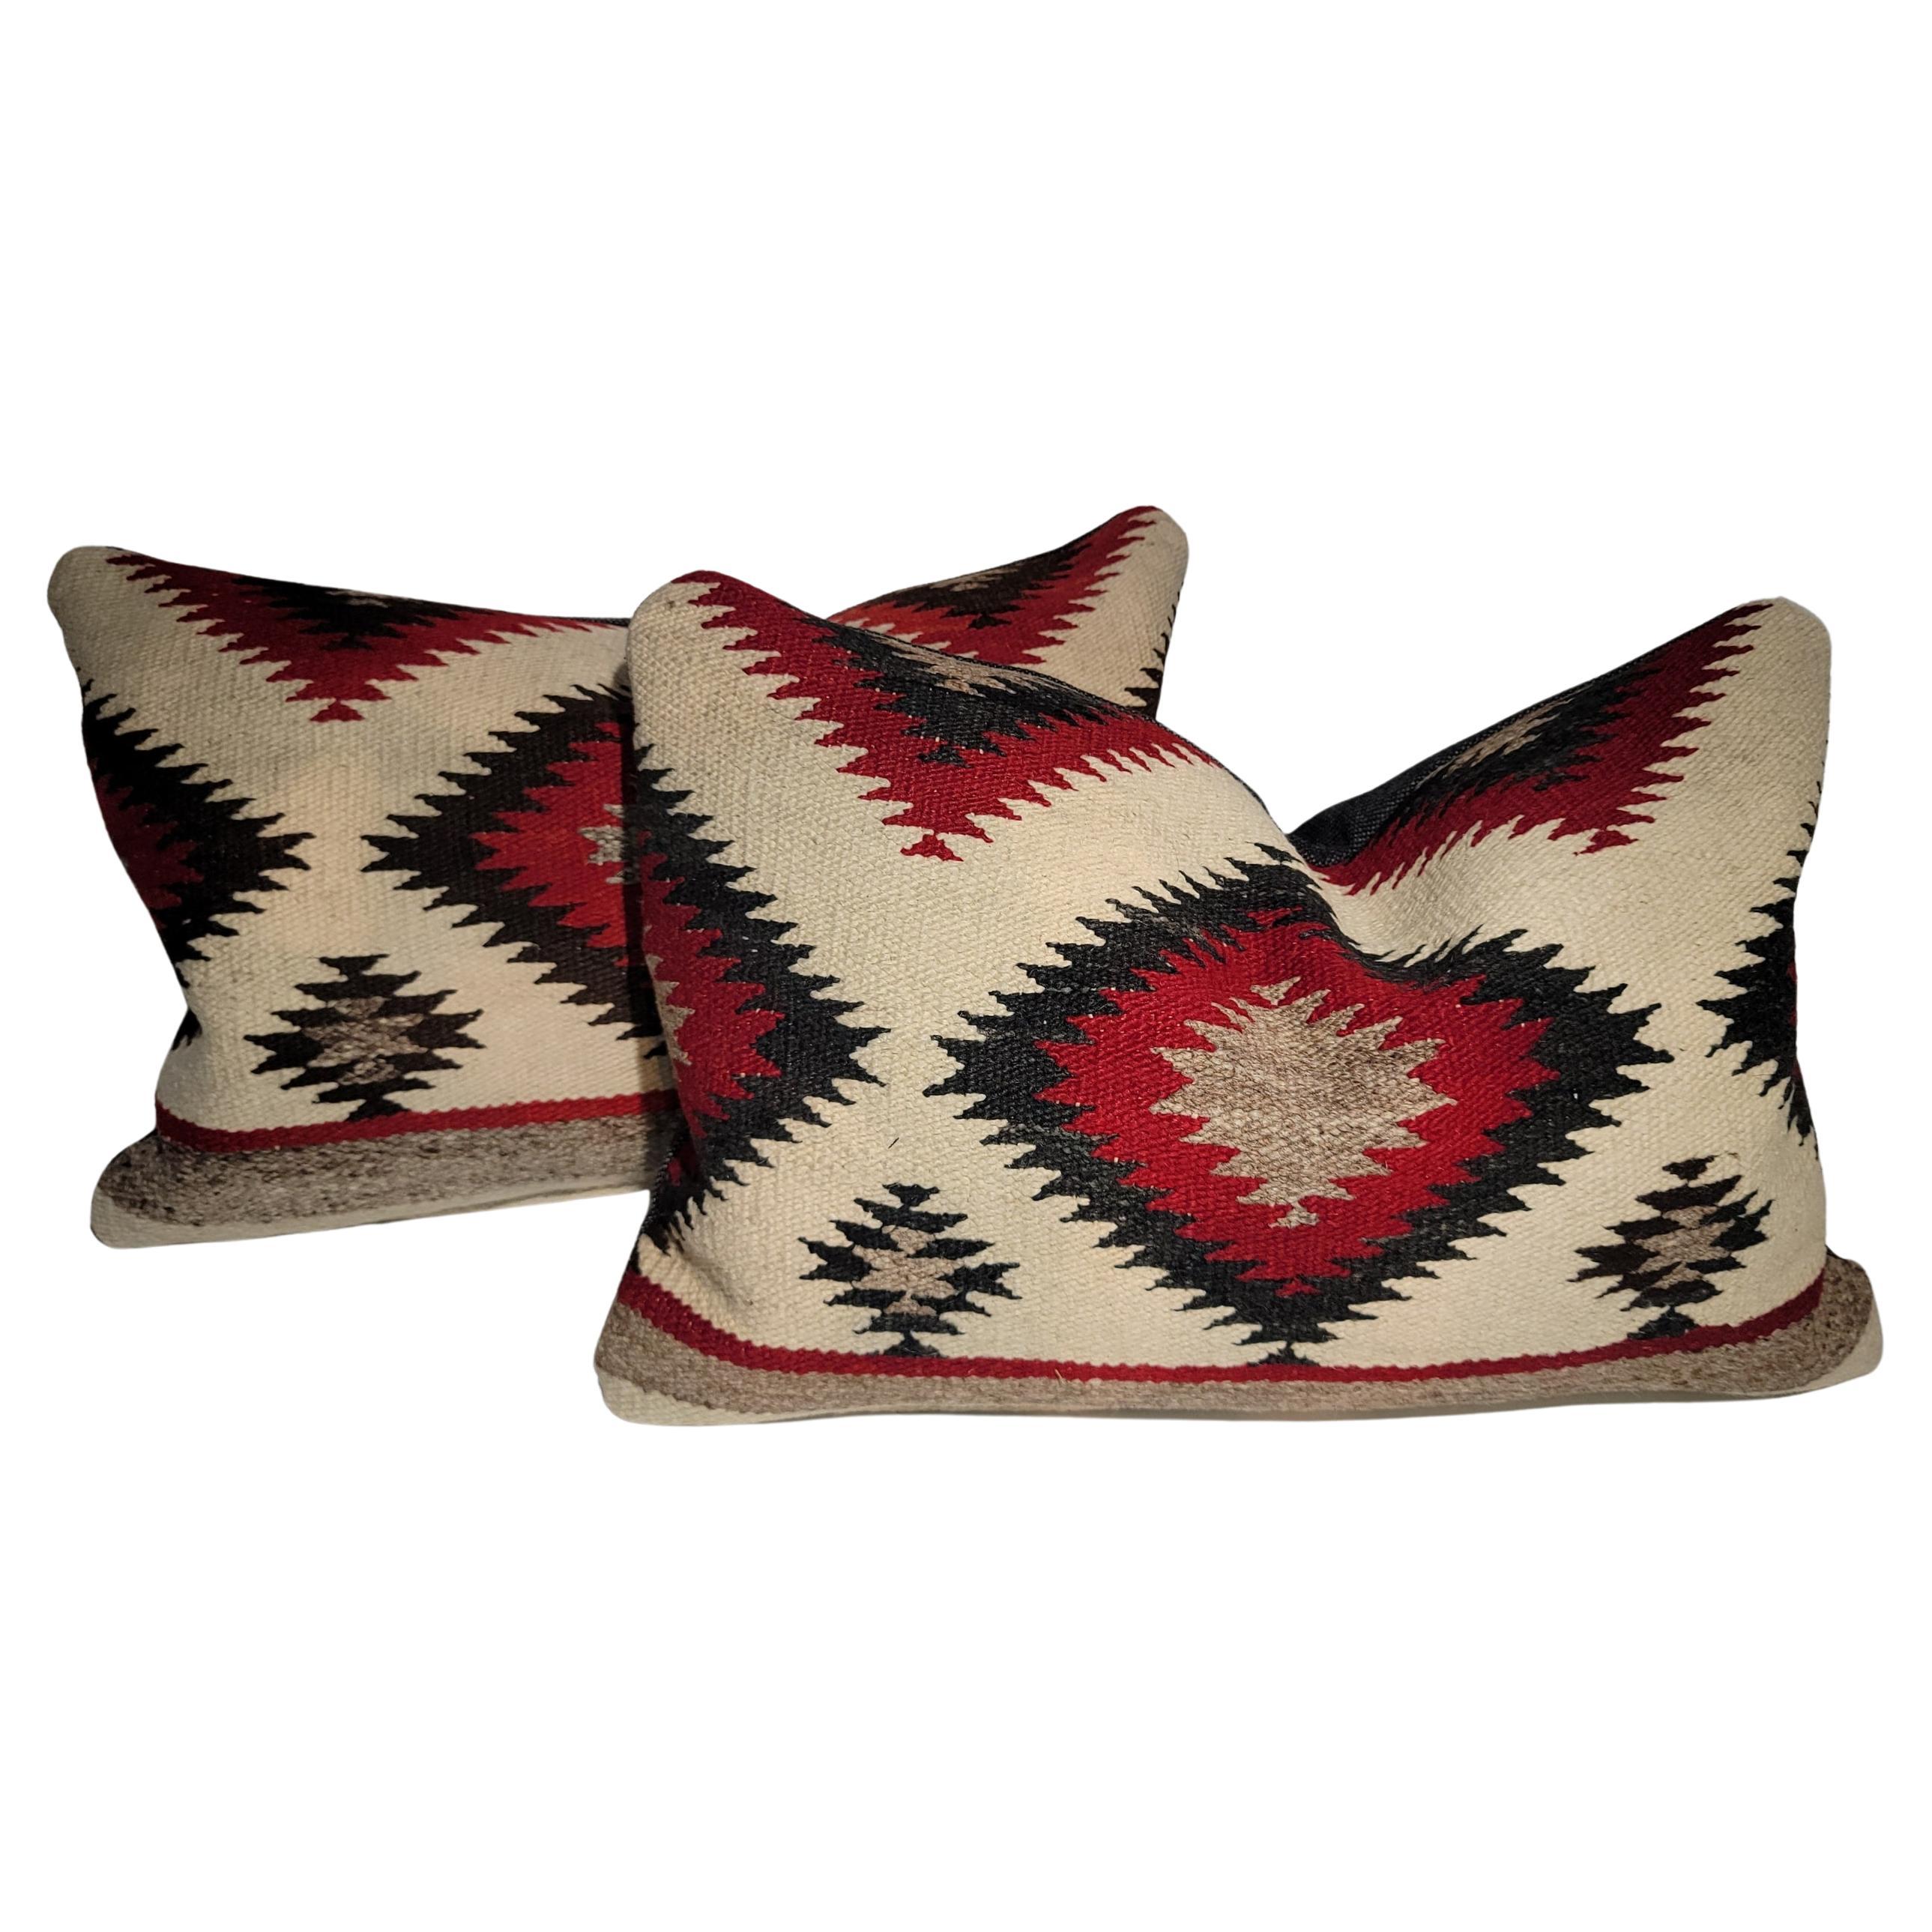 Navajo Indian Weaving Pillows -Pair